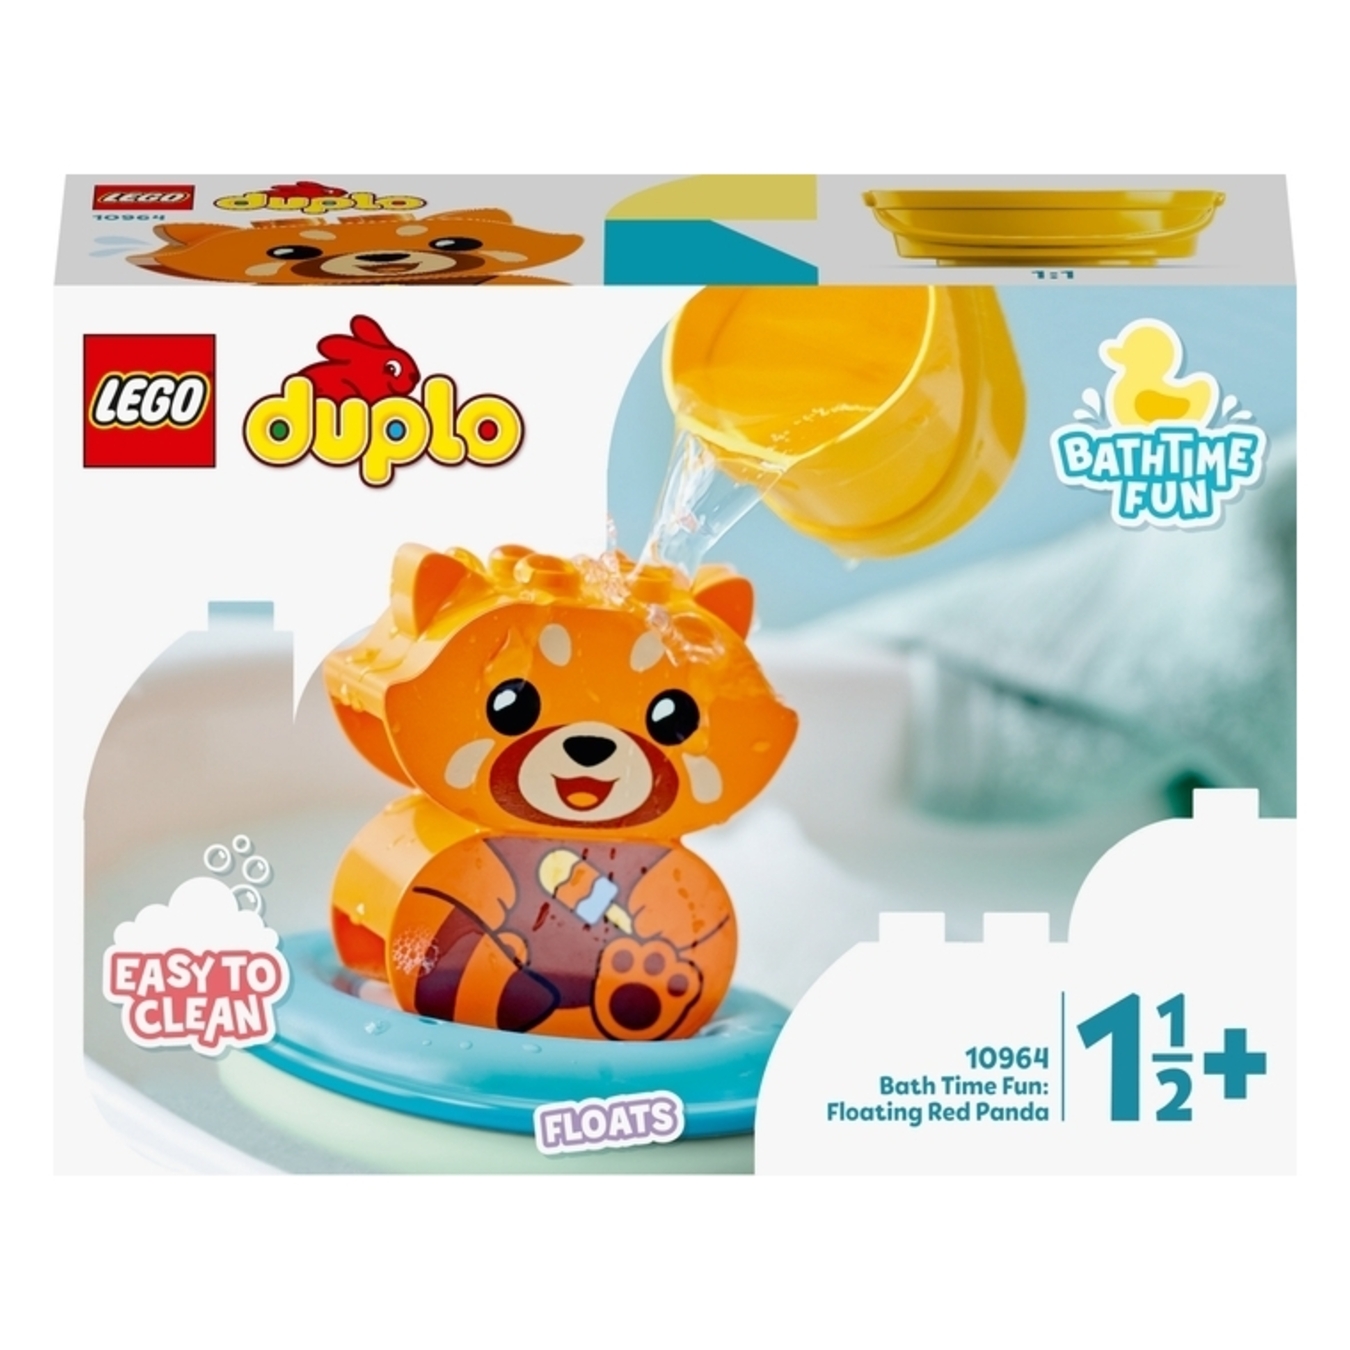 Constructor LEGO Fun Bathing: Floating Red Panda